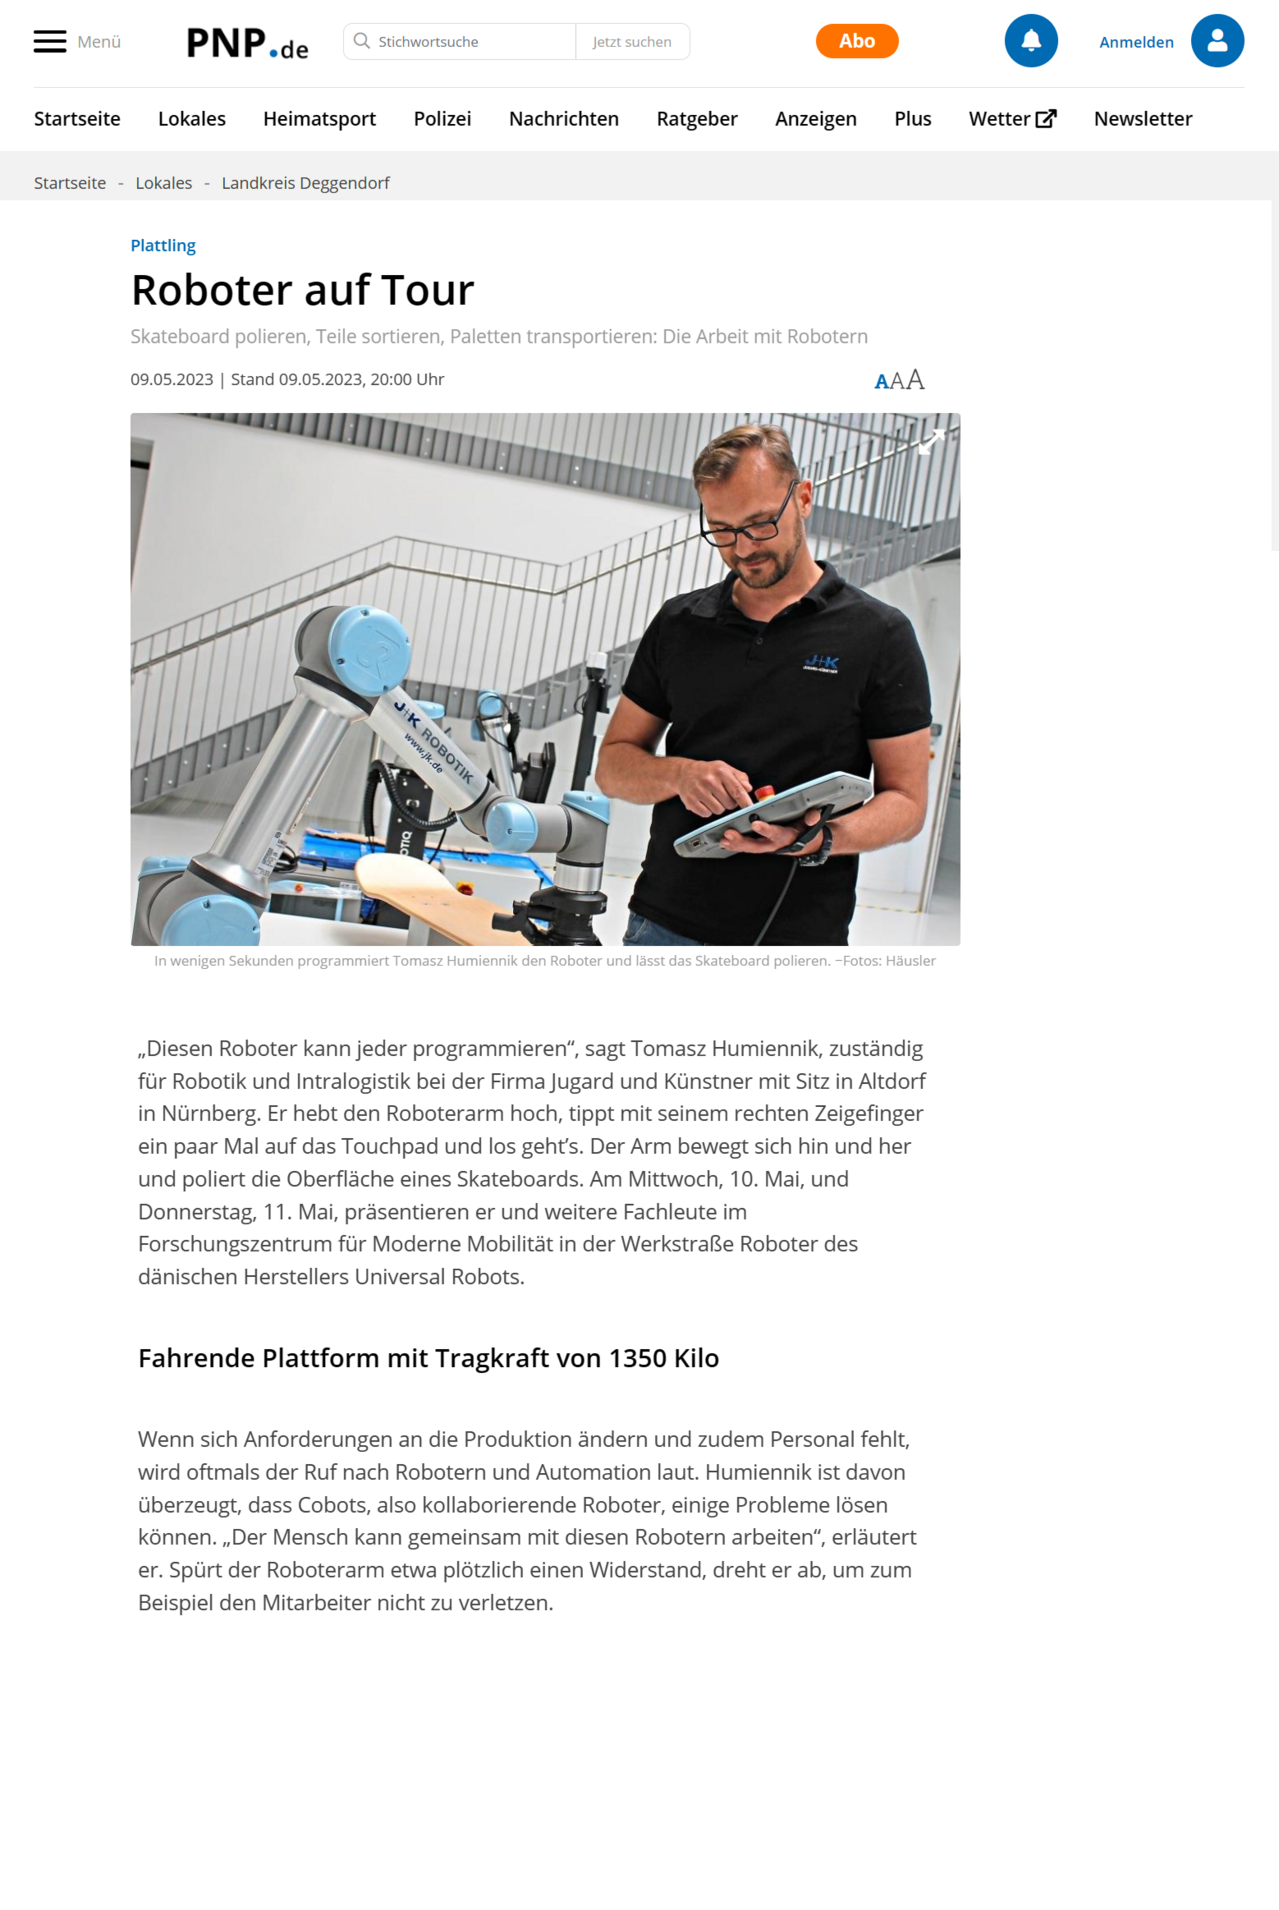 Pressebeleg_Passauer_Neue_Presse_Roboter_auf_Tour_Plattling_9.05.2023.png